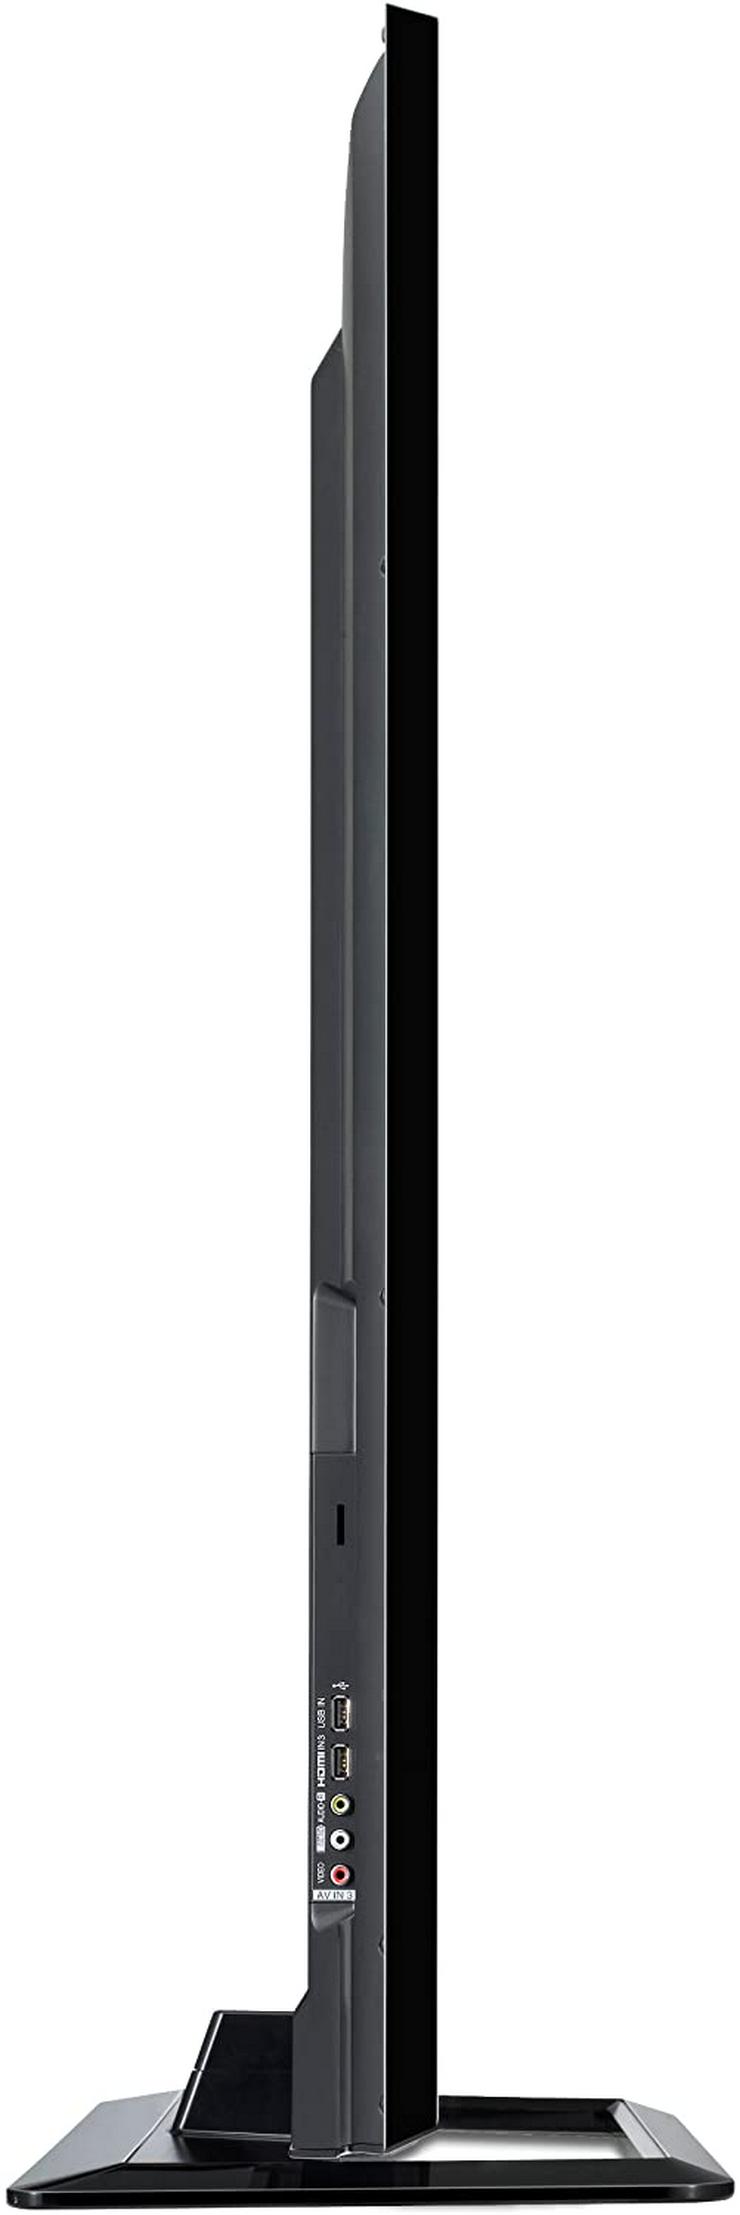 LG 50PA4500 127 cm (50 Zoll) Plasma Fernseher (HD-Ready, Twin Tuner) - > 45 Zoll - Bild 3